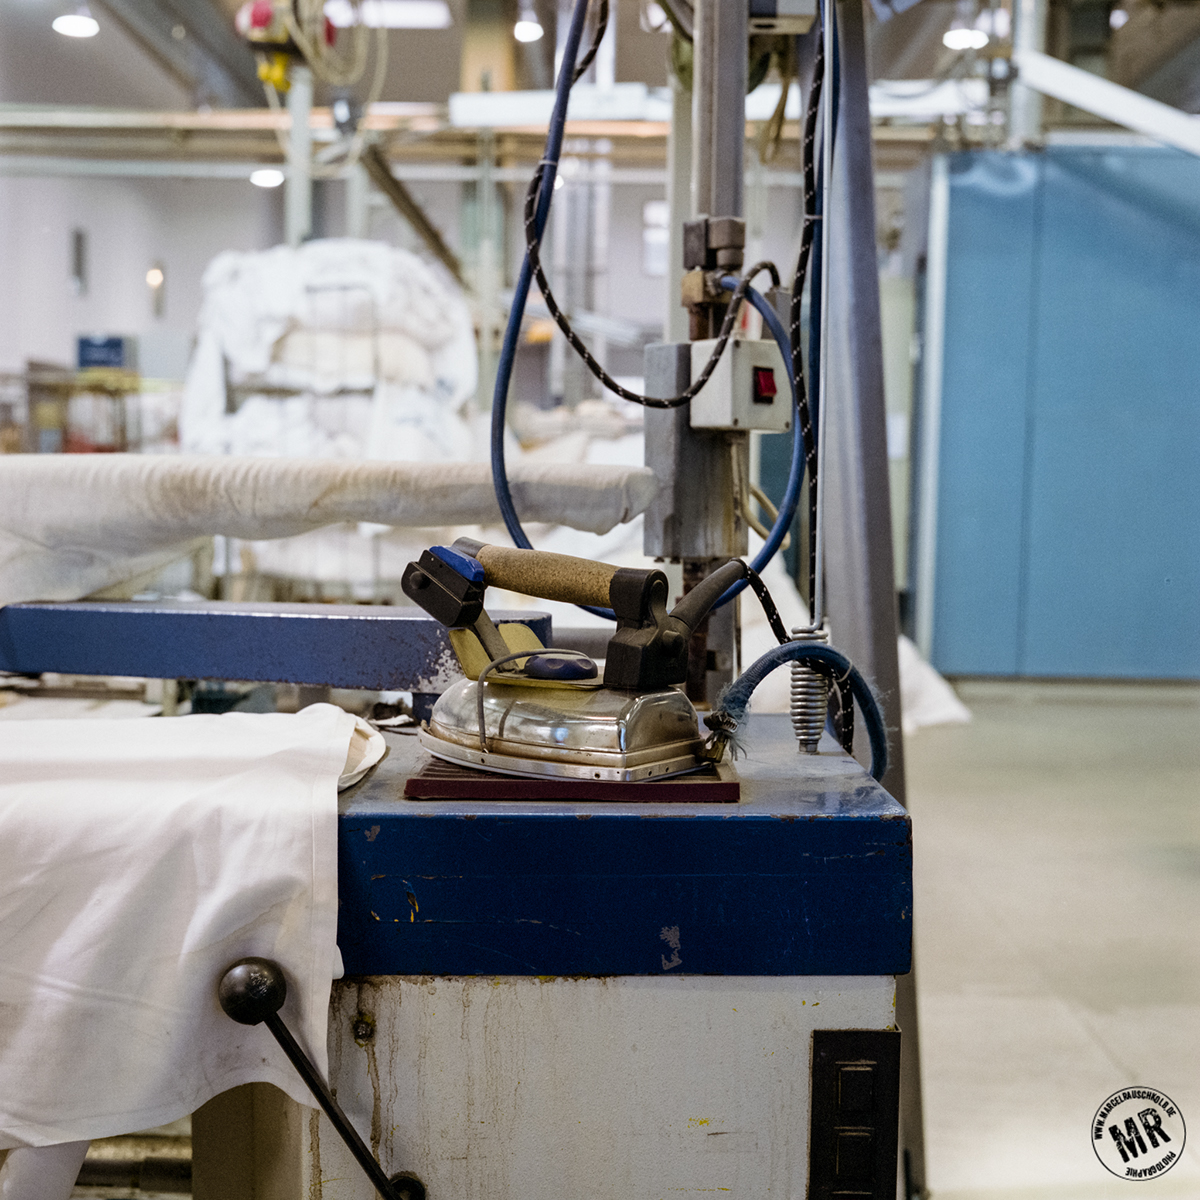 laundry industry abandoned place technic Still Hasselblad rolleiflex Fuji X-Pro 1 Fujicolor 400H